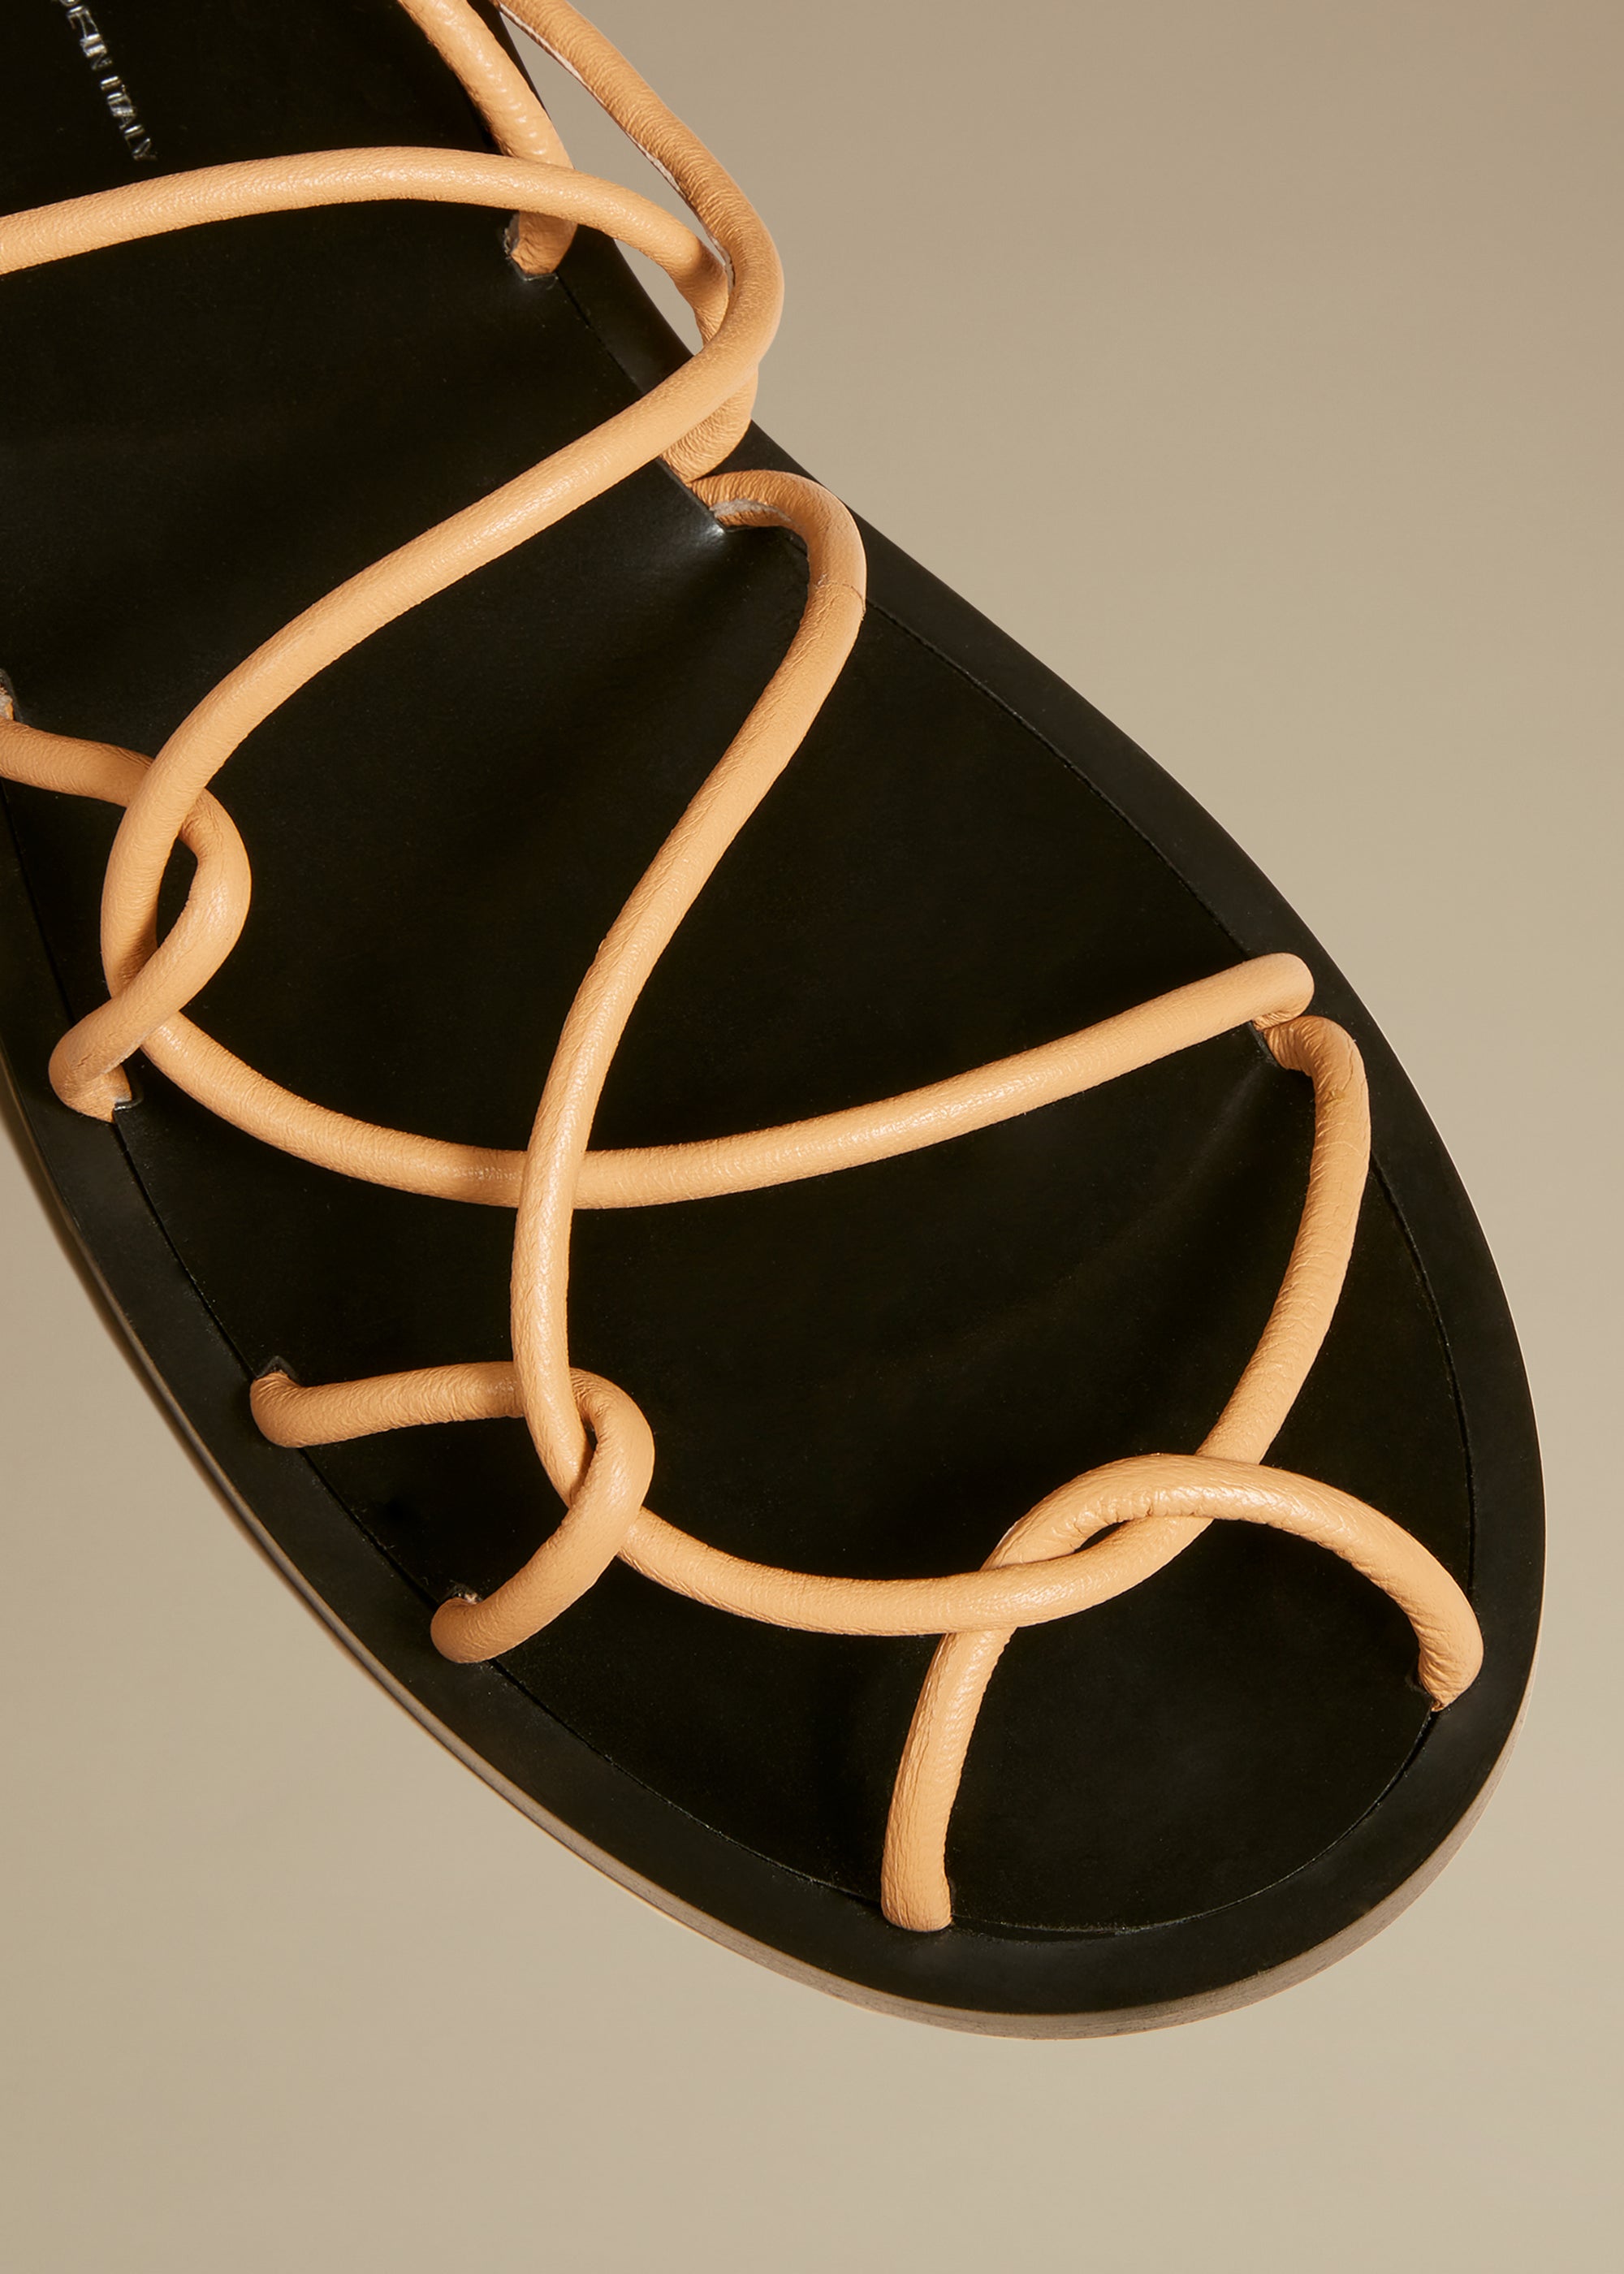 Lyon sandal in leather - Nude